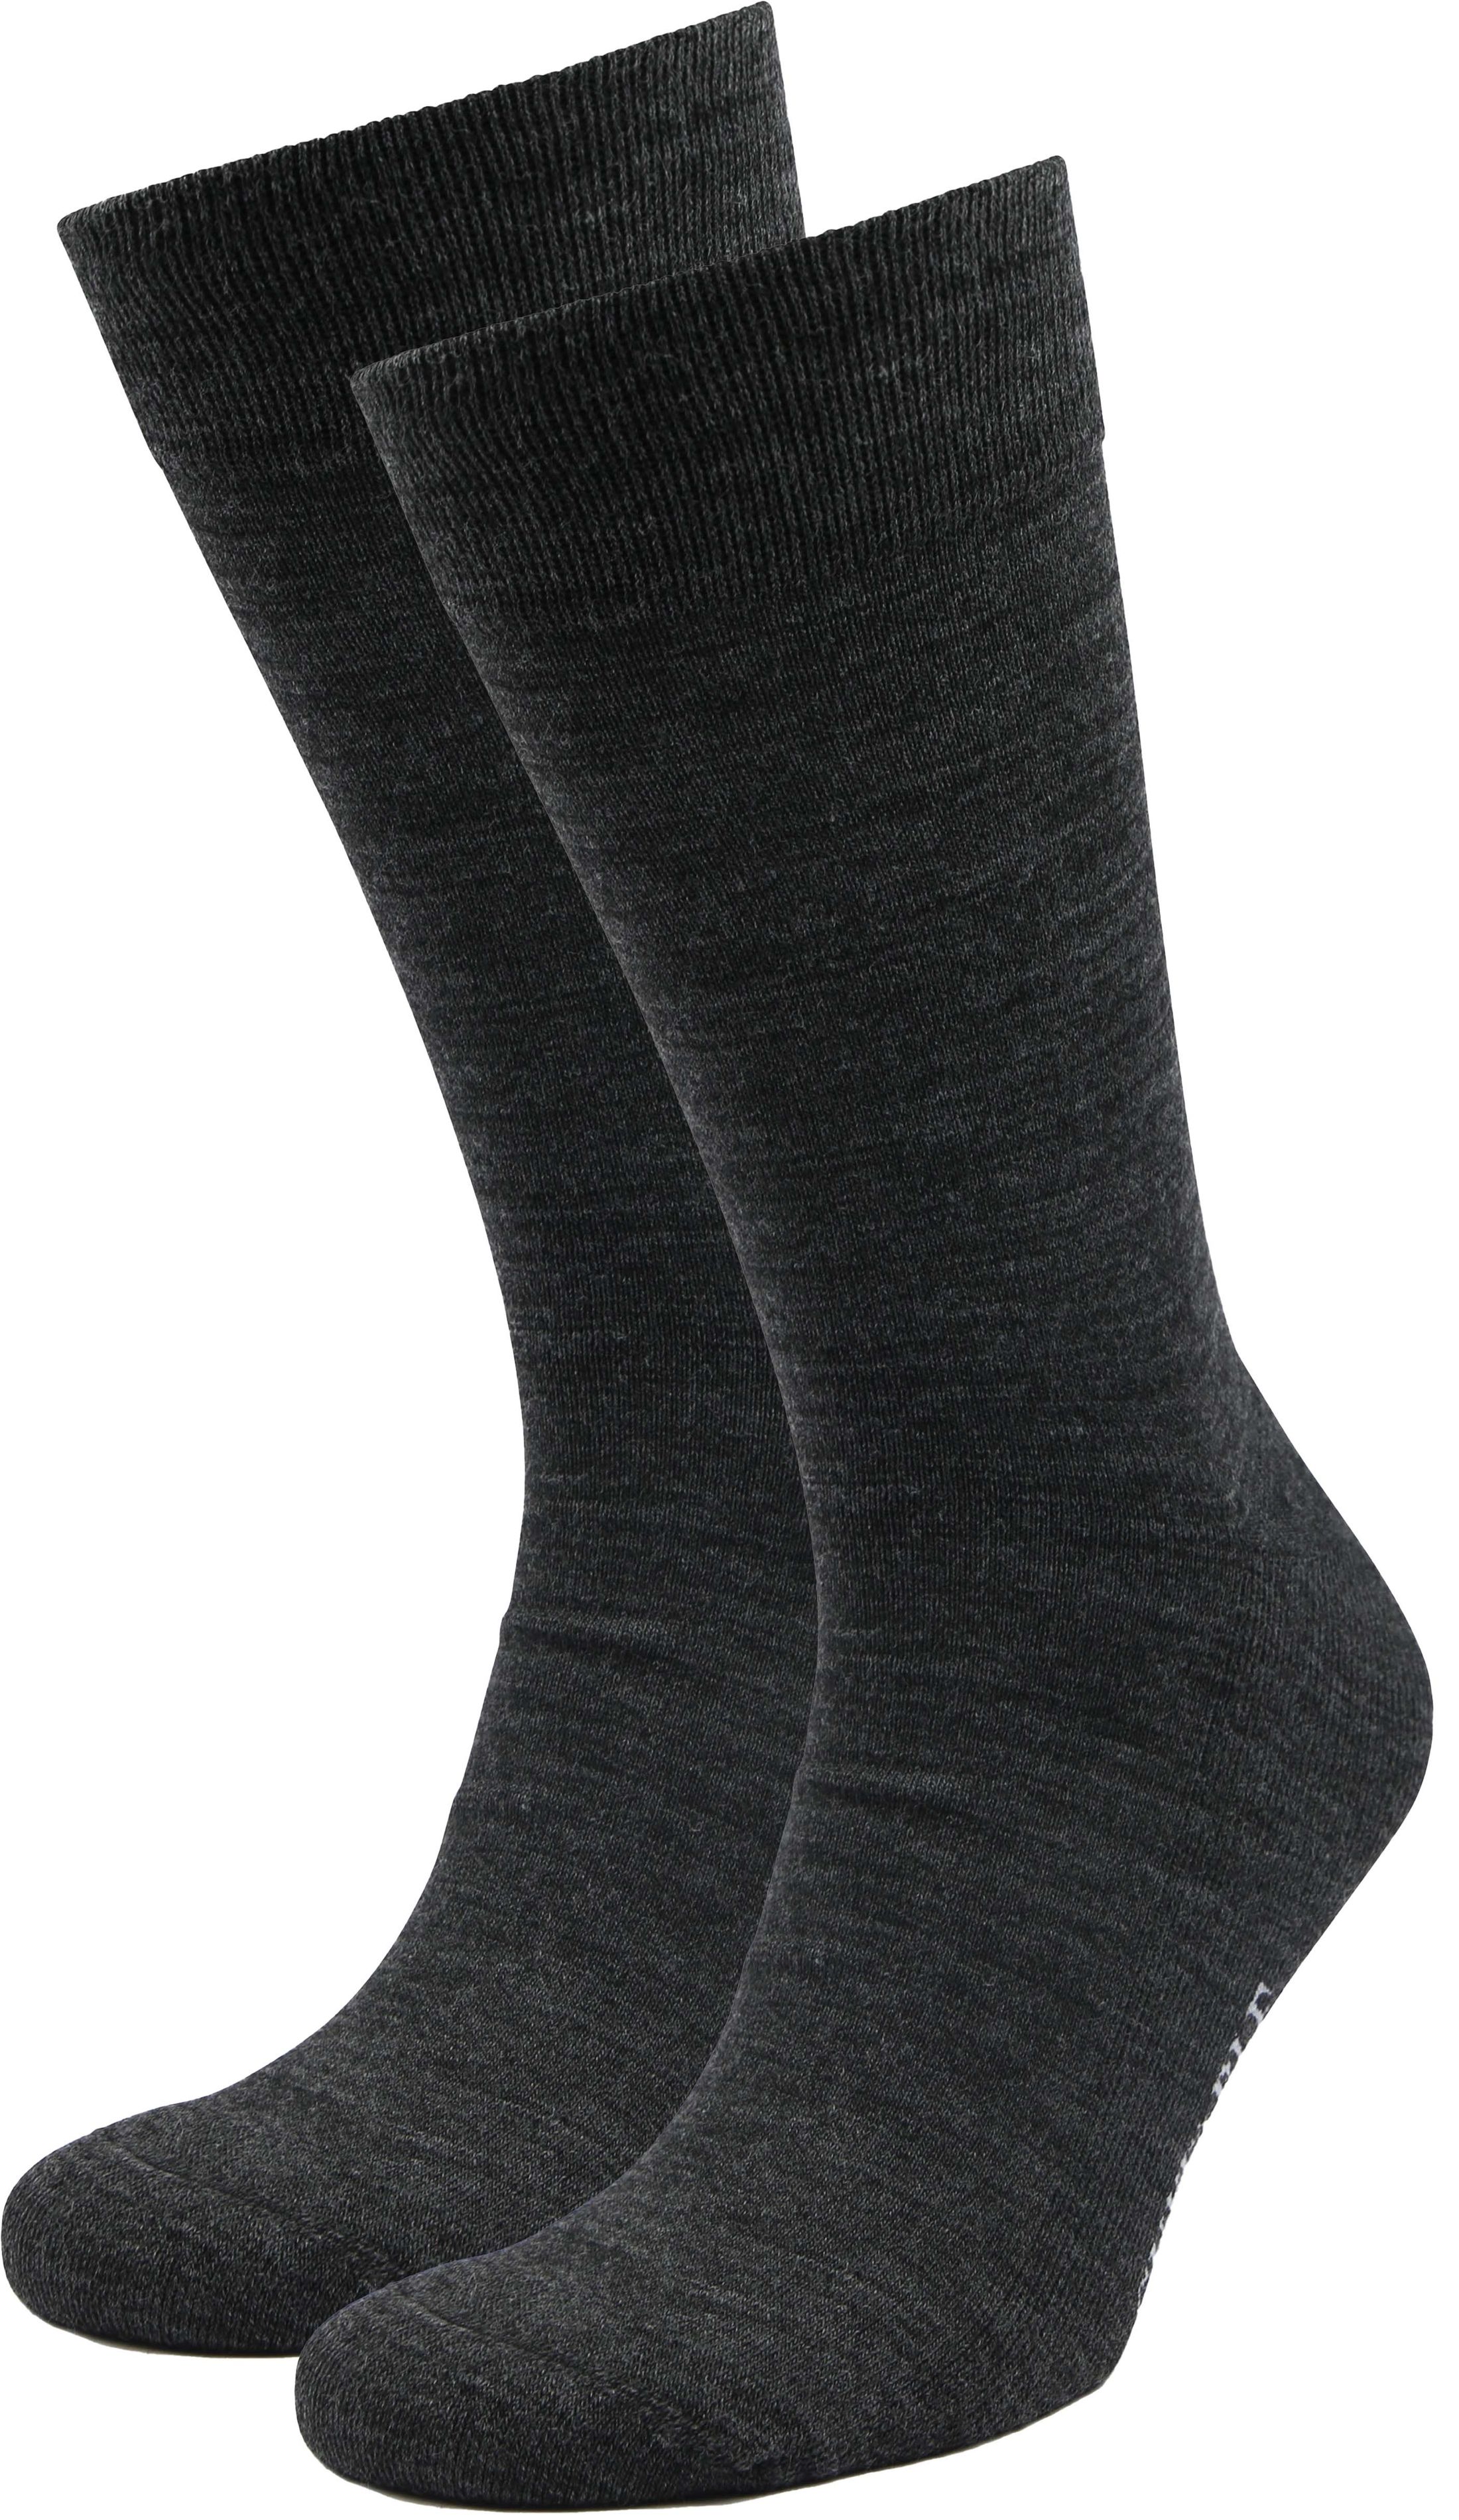 Suitable Merino Socks Anthracite 2-Pack Grey Dark Grey size 43-46 product